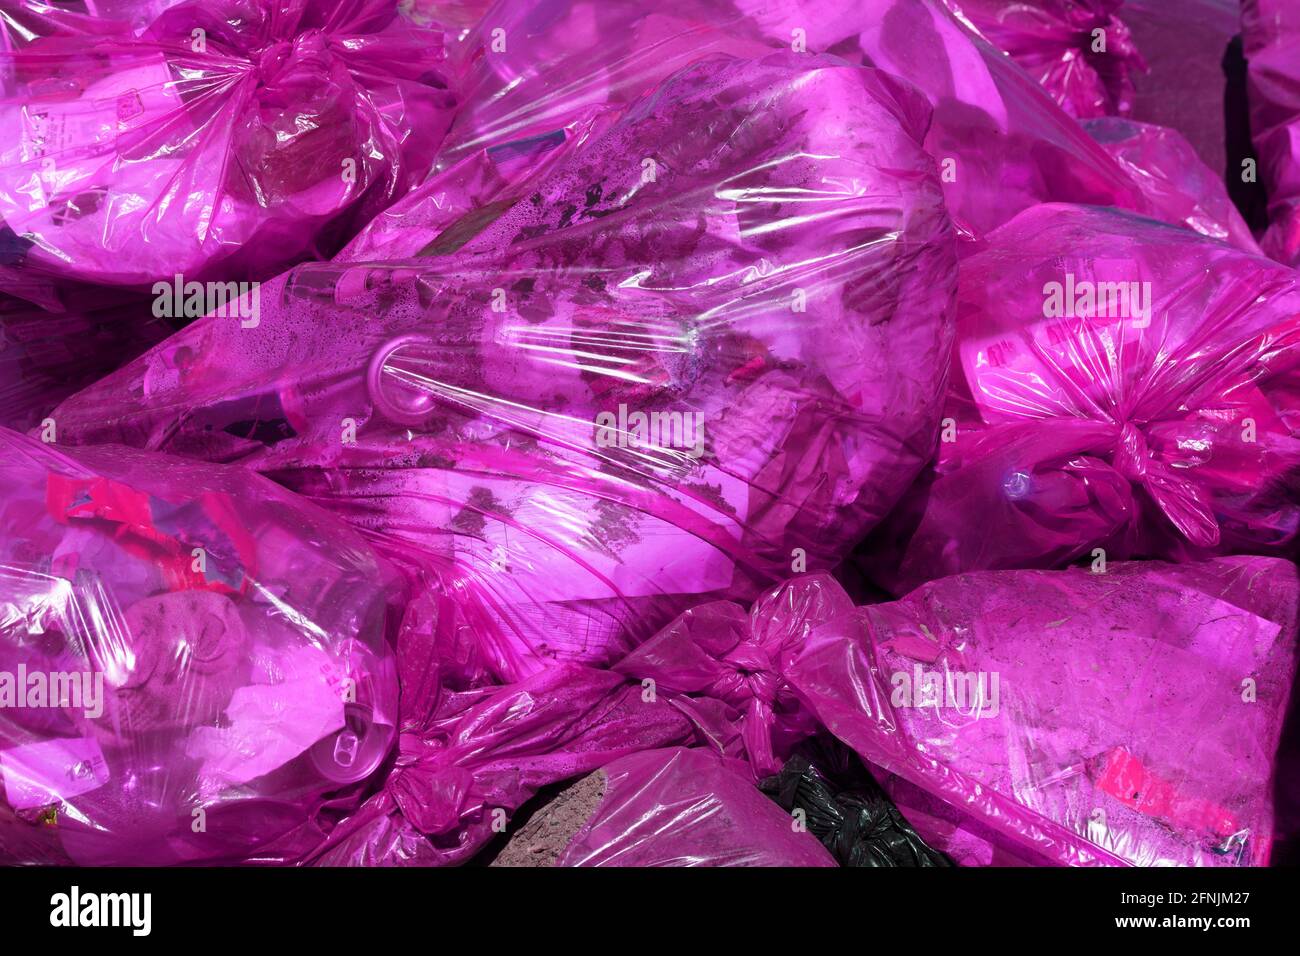 https://c8.alamy.com/comp/2FNJM27/full-frame-background-of-purple-plastic-trash-bags-with-generic-domestic-waste-2FNJM27.jpg